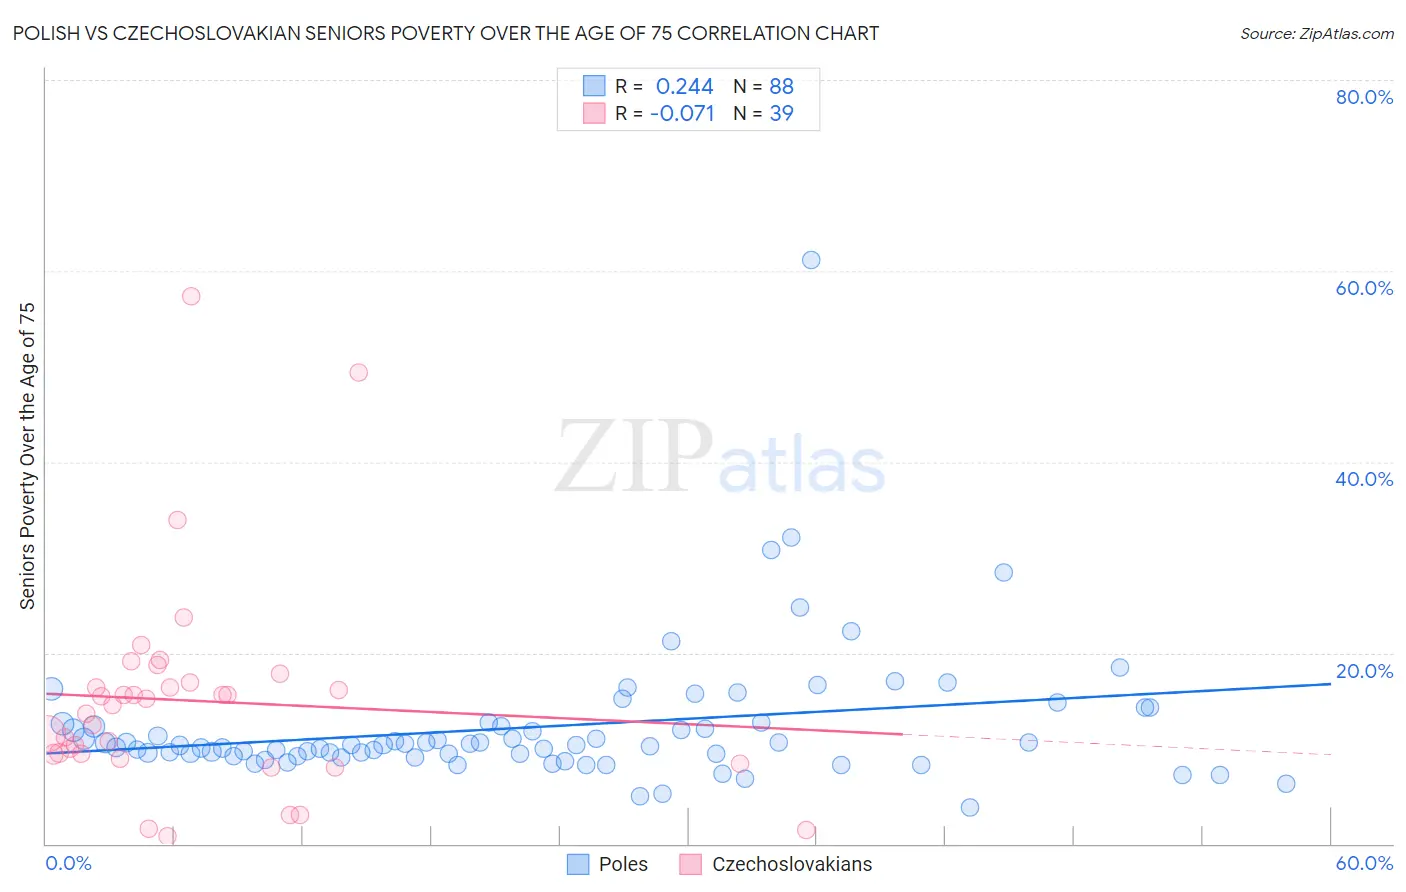 Polish vs Czechoslovakian Seniors Poverty Over the Age of 75